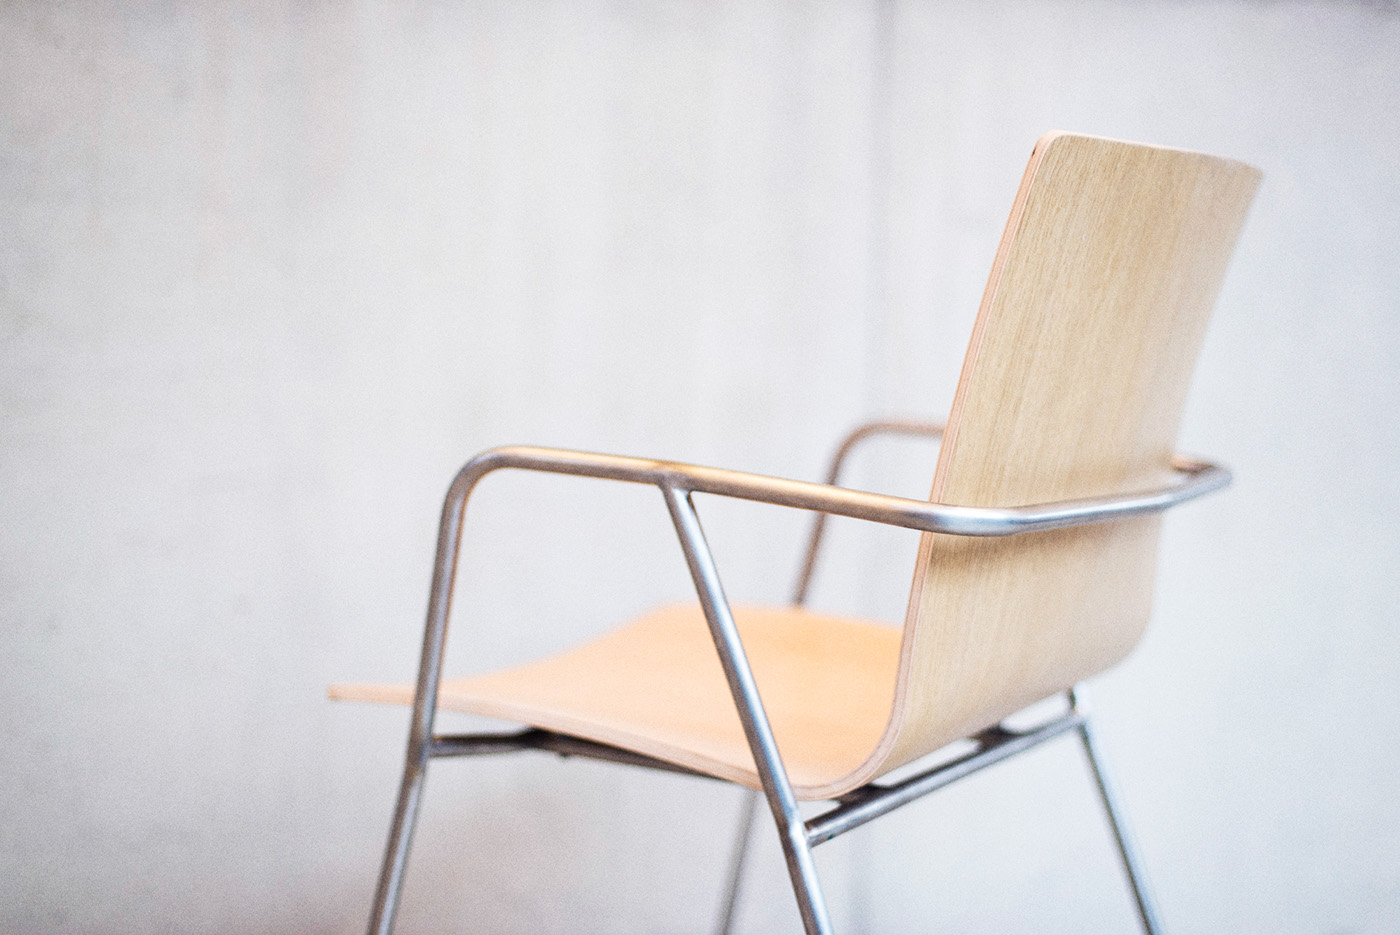 plywood chair chairdesign prototype universit student steel furniture